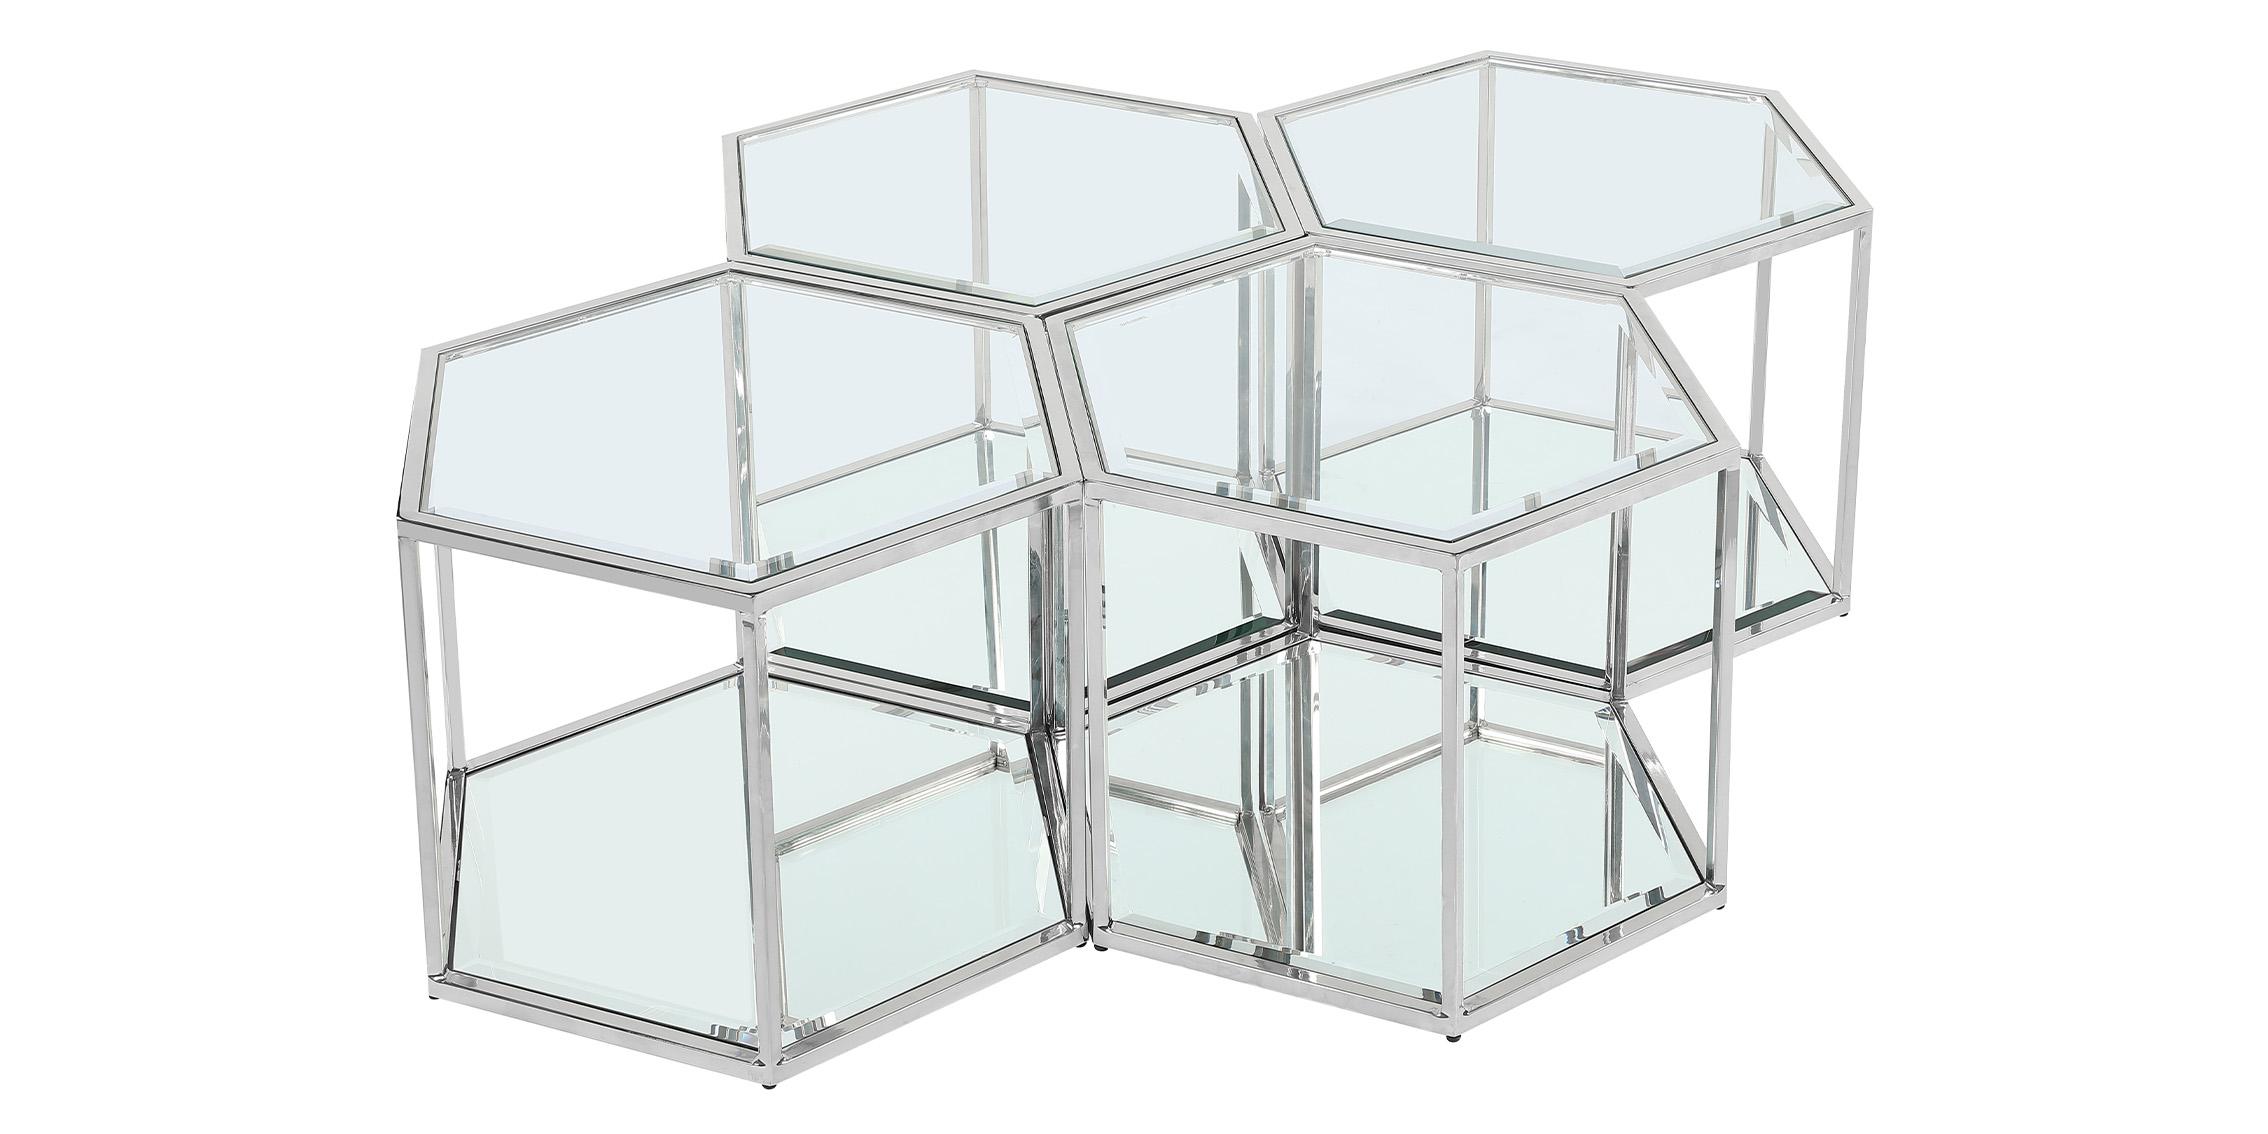 

    
Chrome Stainless Steel & Glass Modular Coffee Table SEI 206-CT-4PC Meridian
